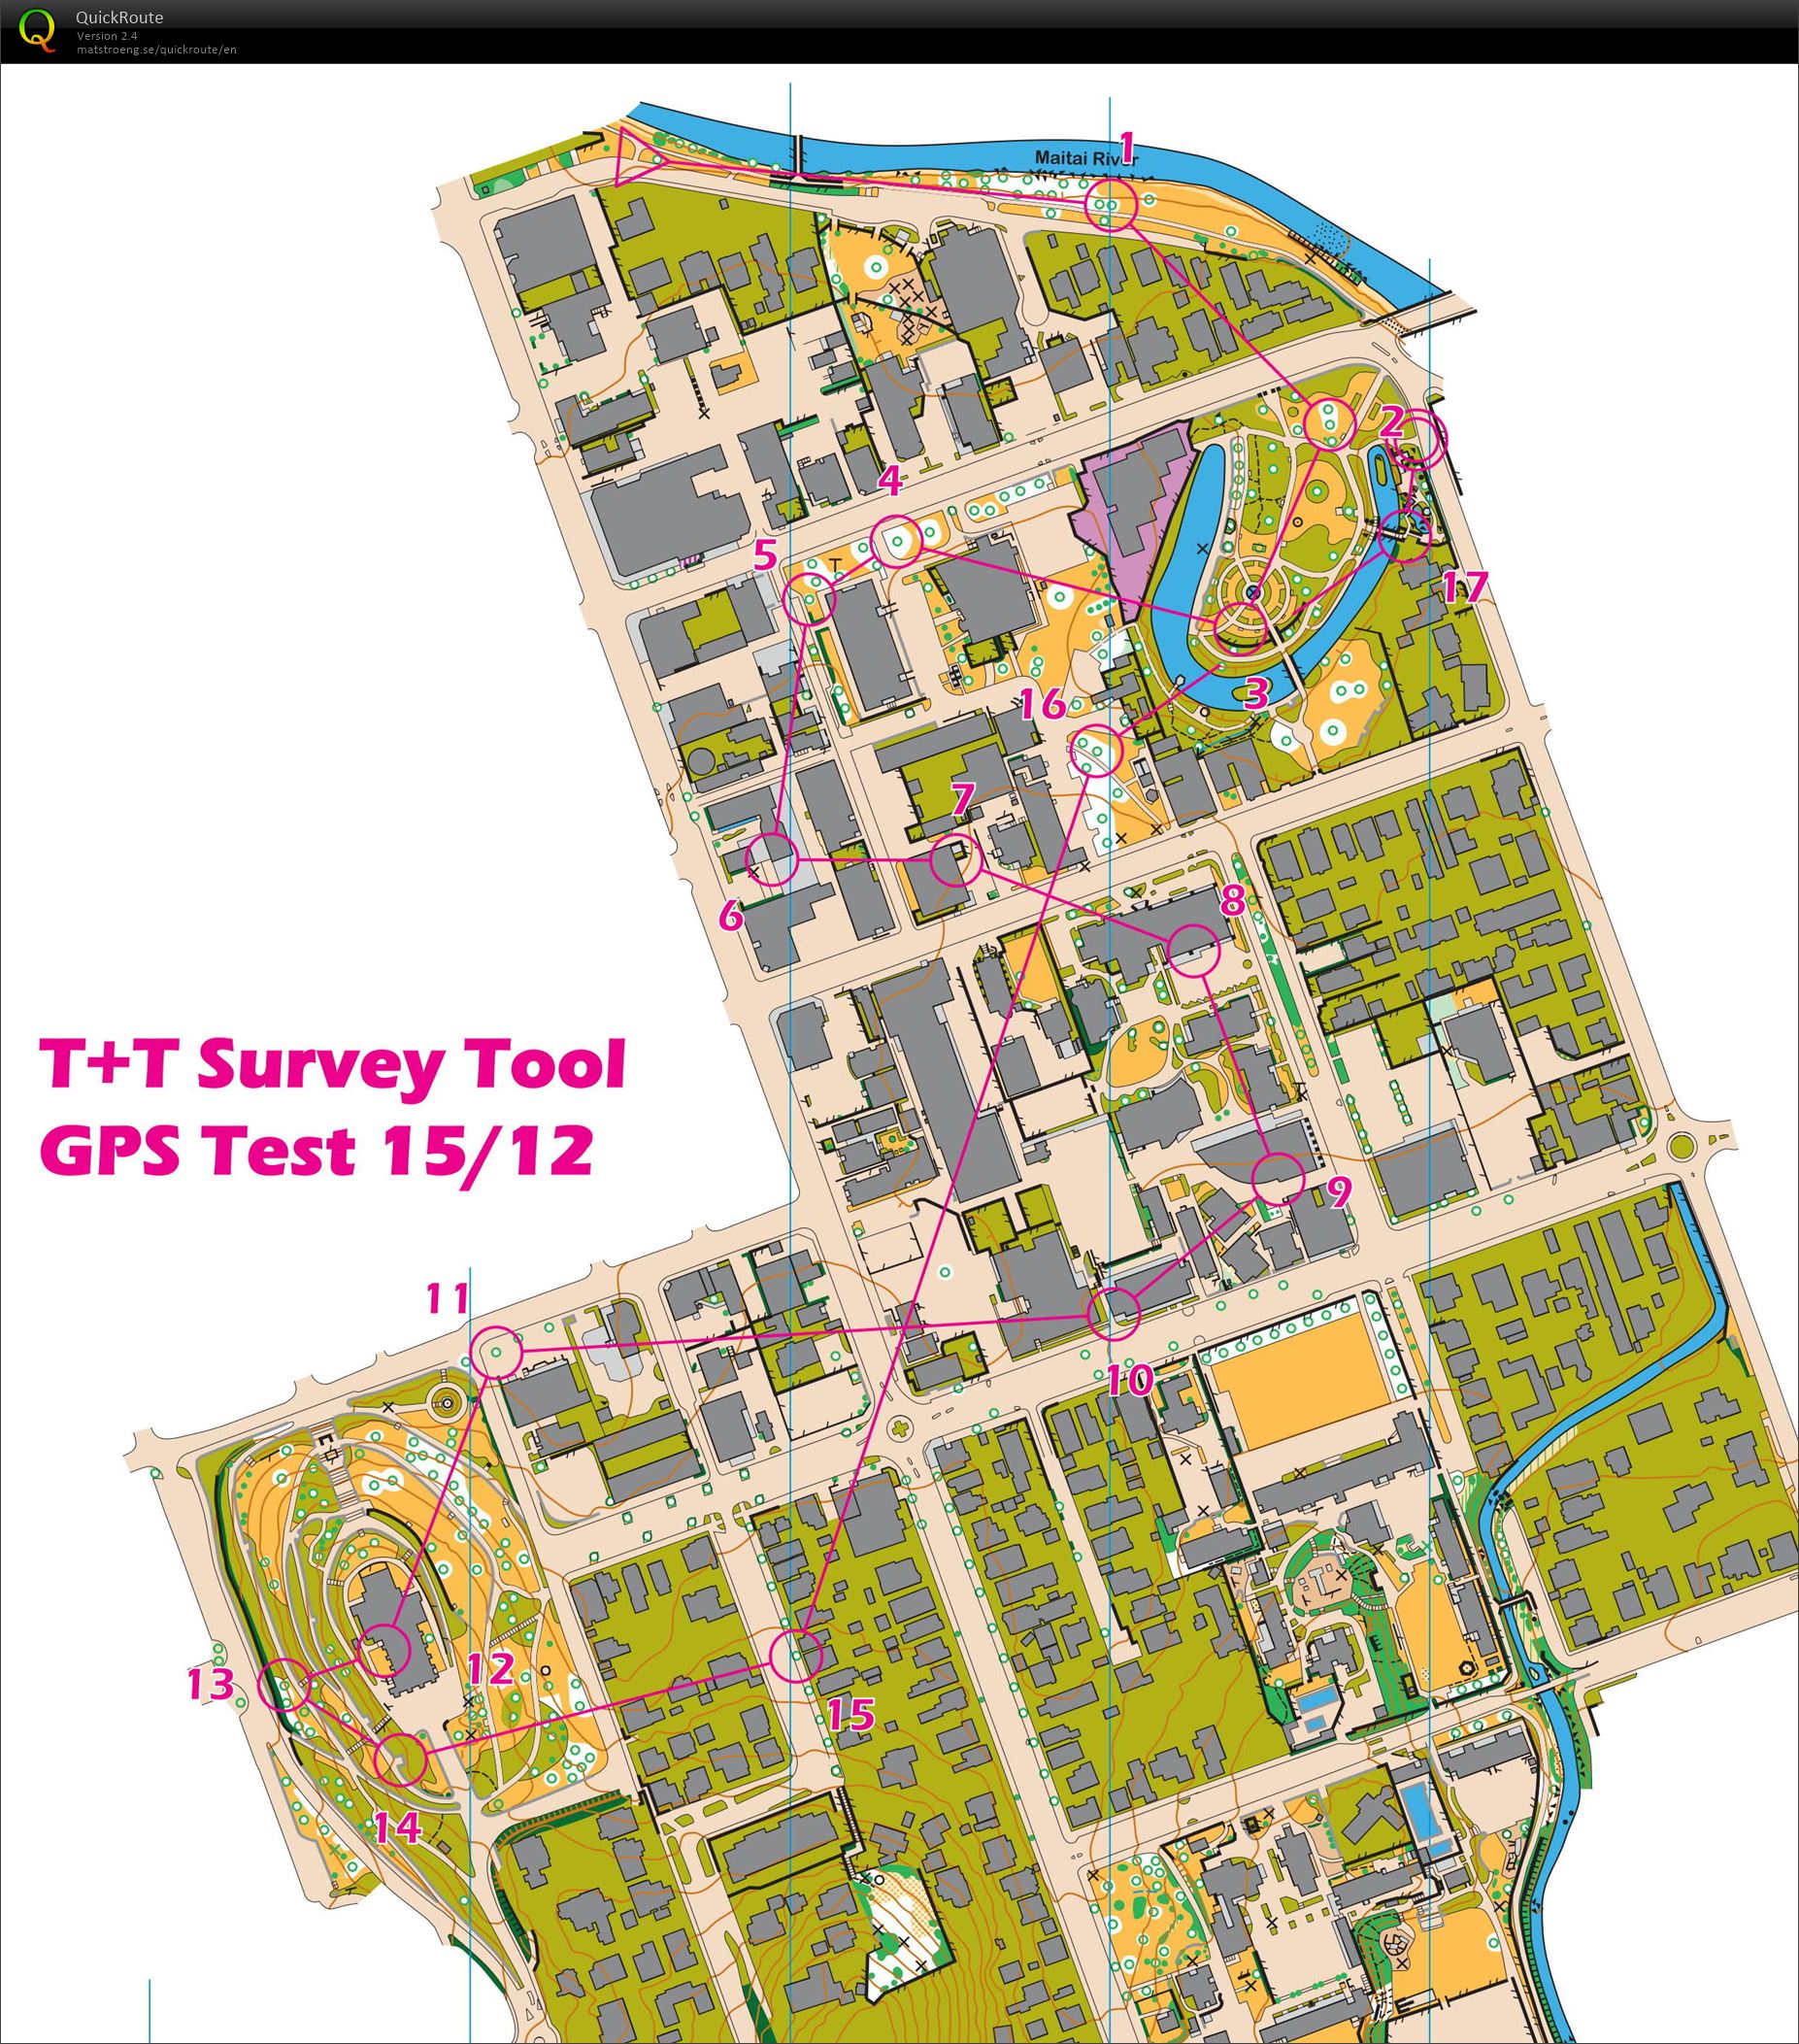 T+T Survey Tool Test (14.12.2020)